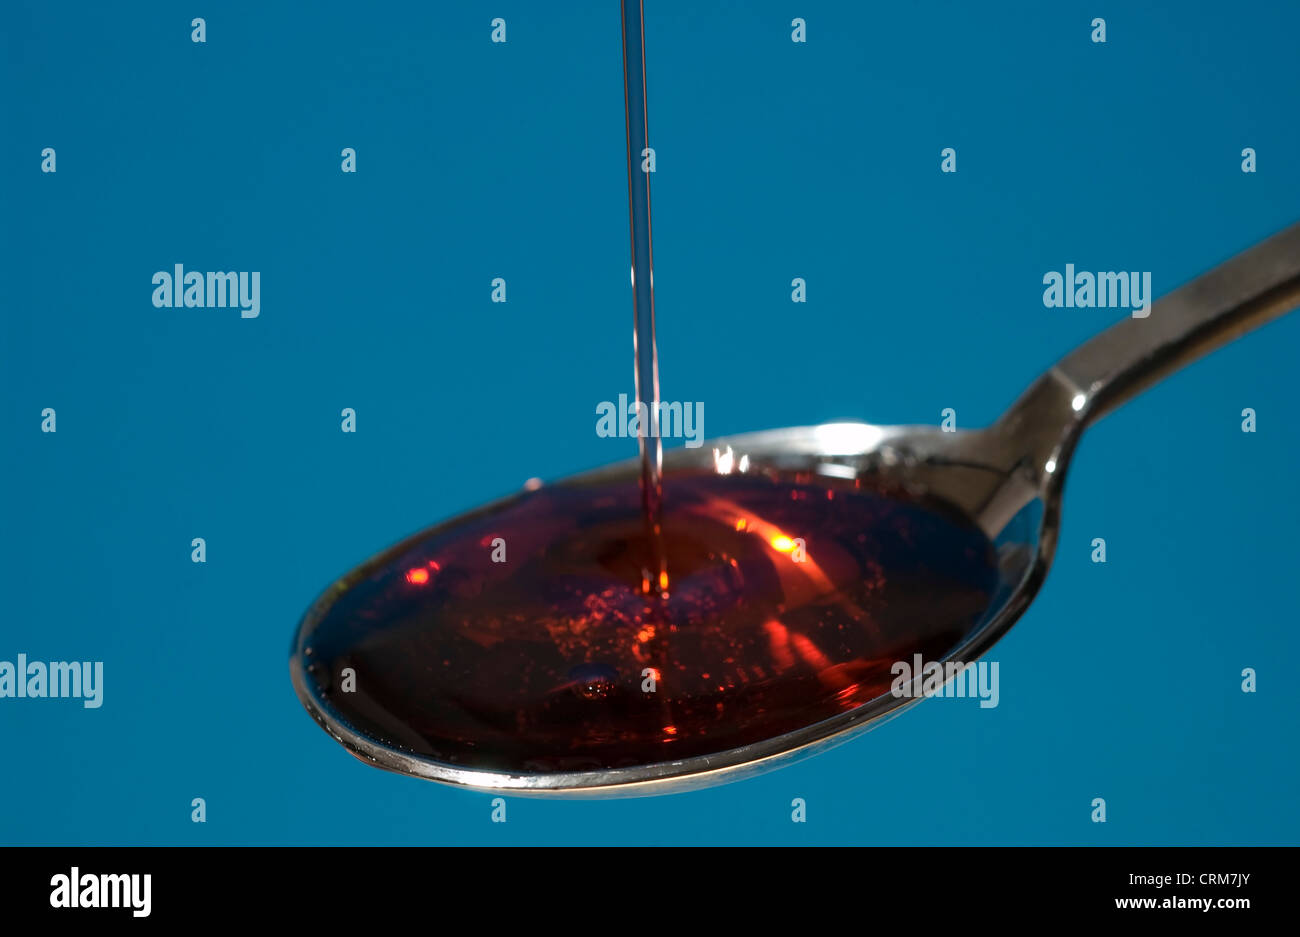 A spoonful of liquid medicine. Stock Photo